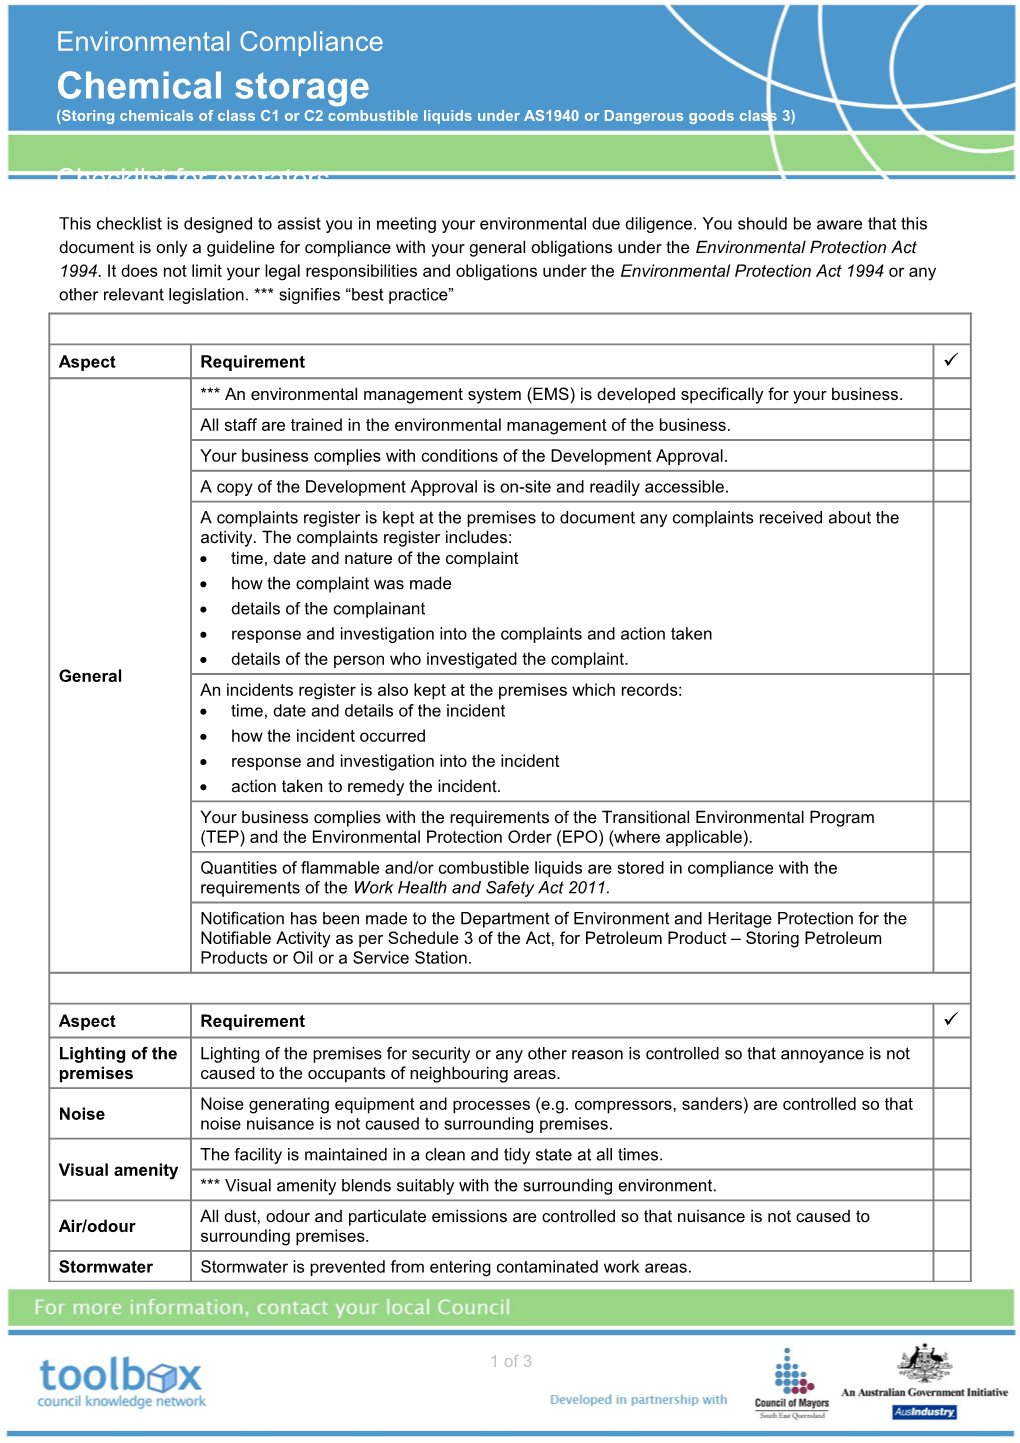 Operator Self Assessment Checklist - Chemical Storage